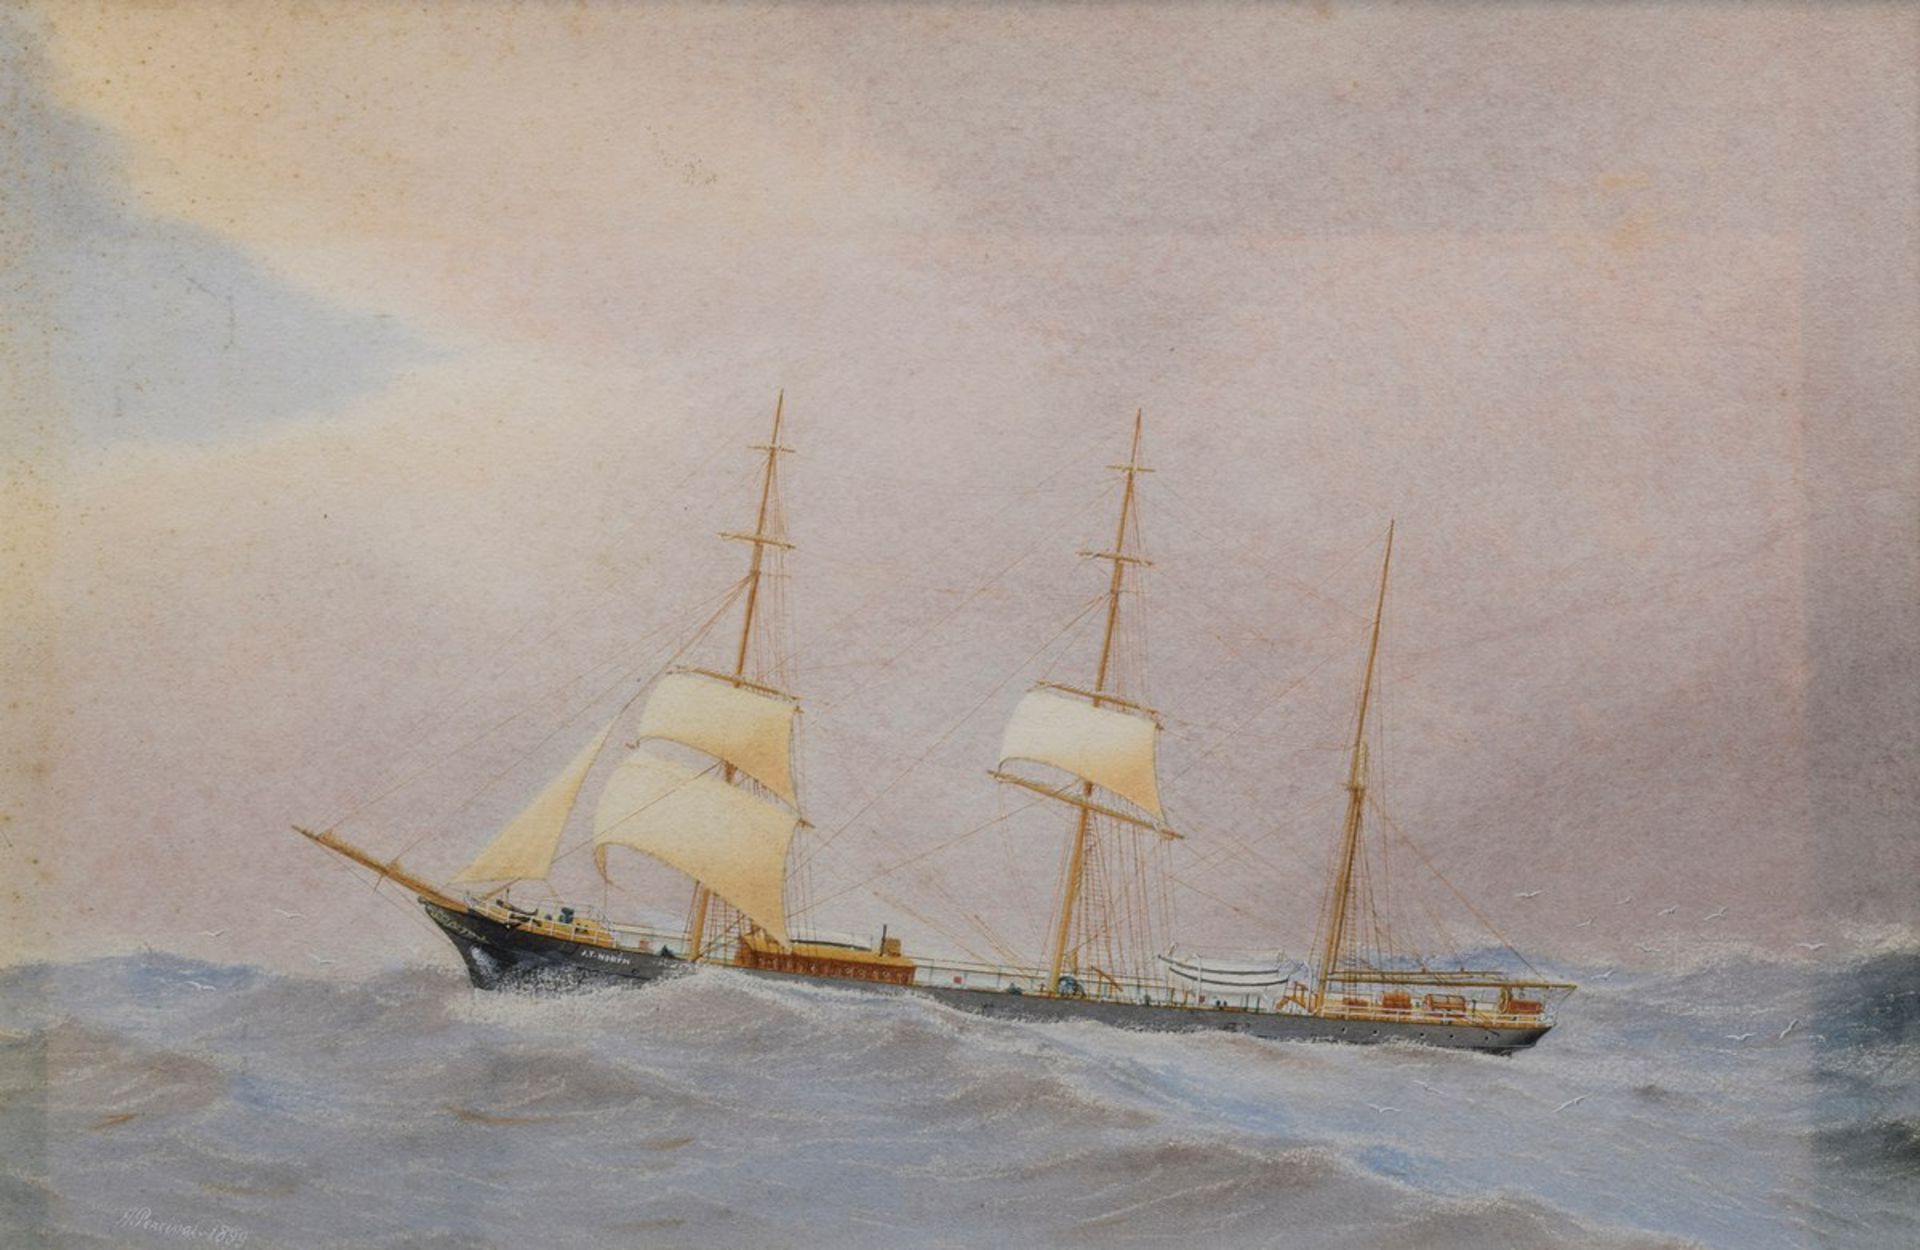 Pervical, Harold (1868-1914) "Kapitänsbild Bark J.T. North, Liverpool" 1899, Aq